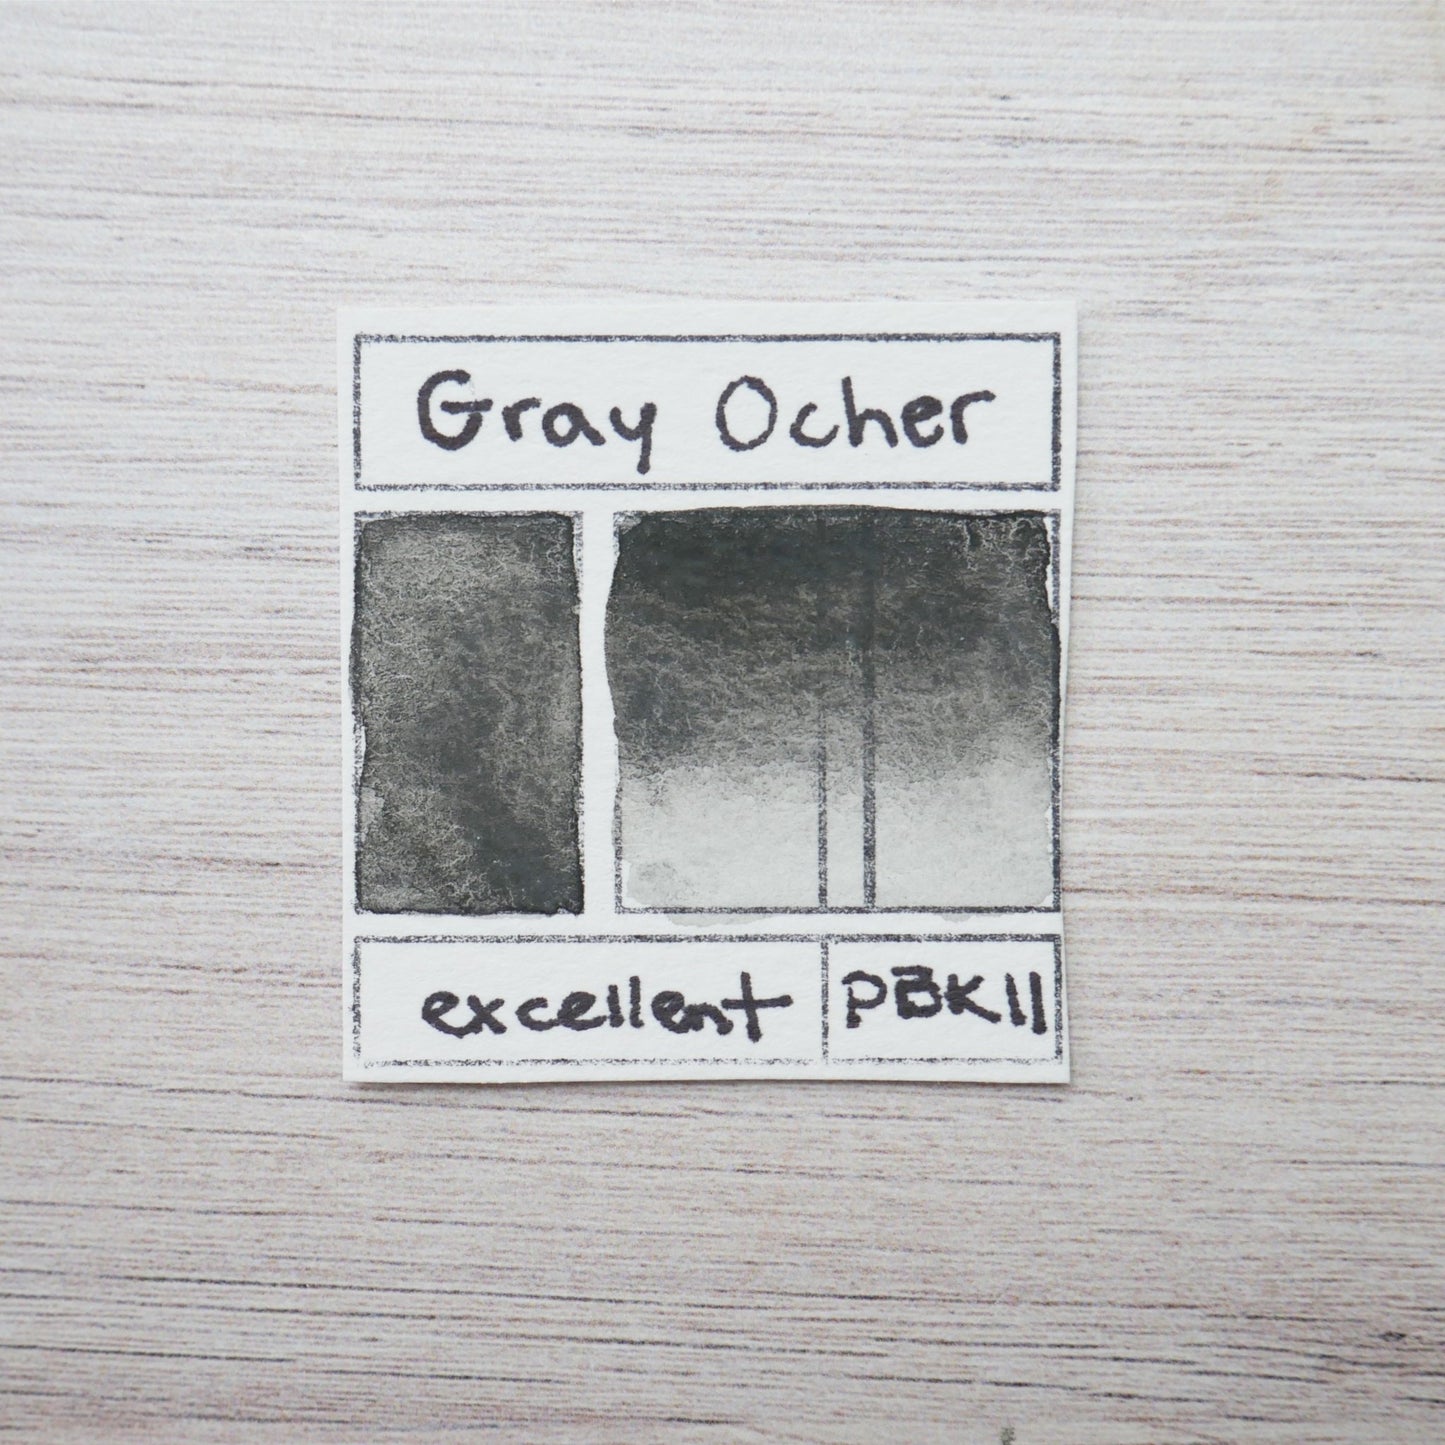 Gray Ocher. Half pan, full pan or bottle cap of handmade watercolor paint